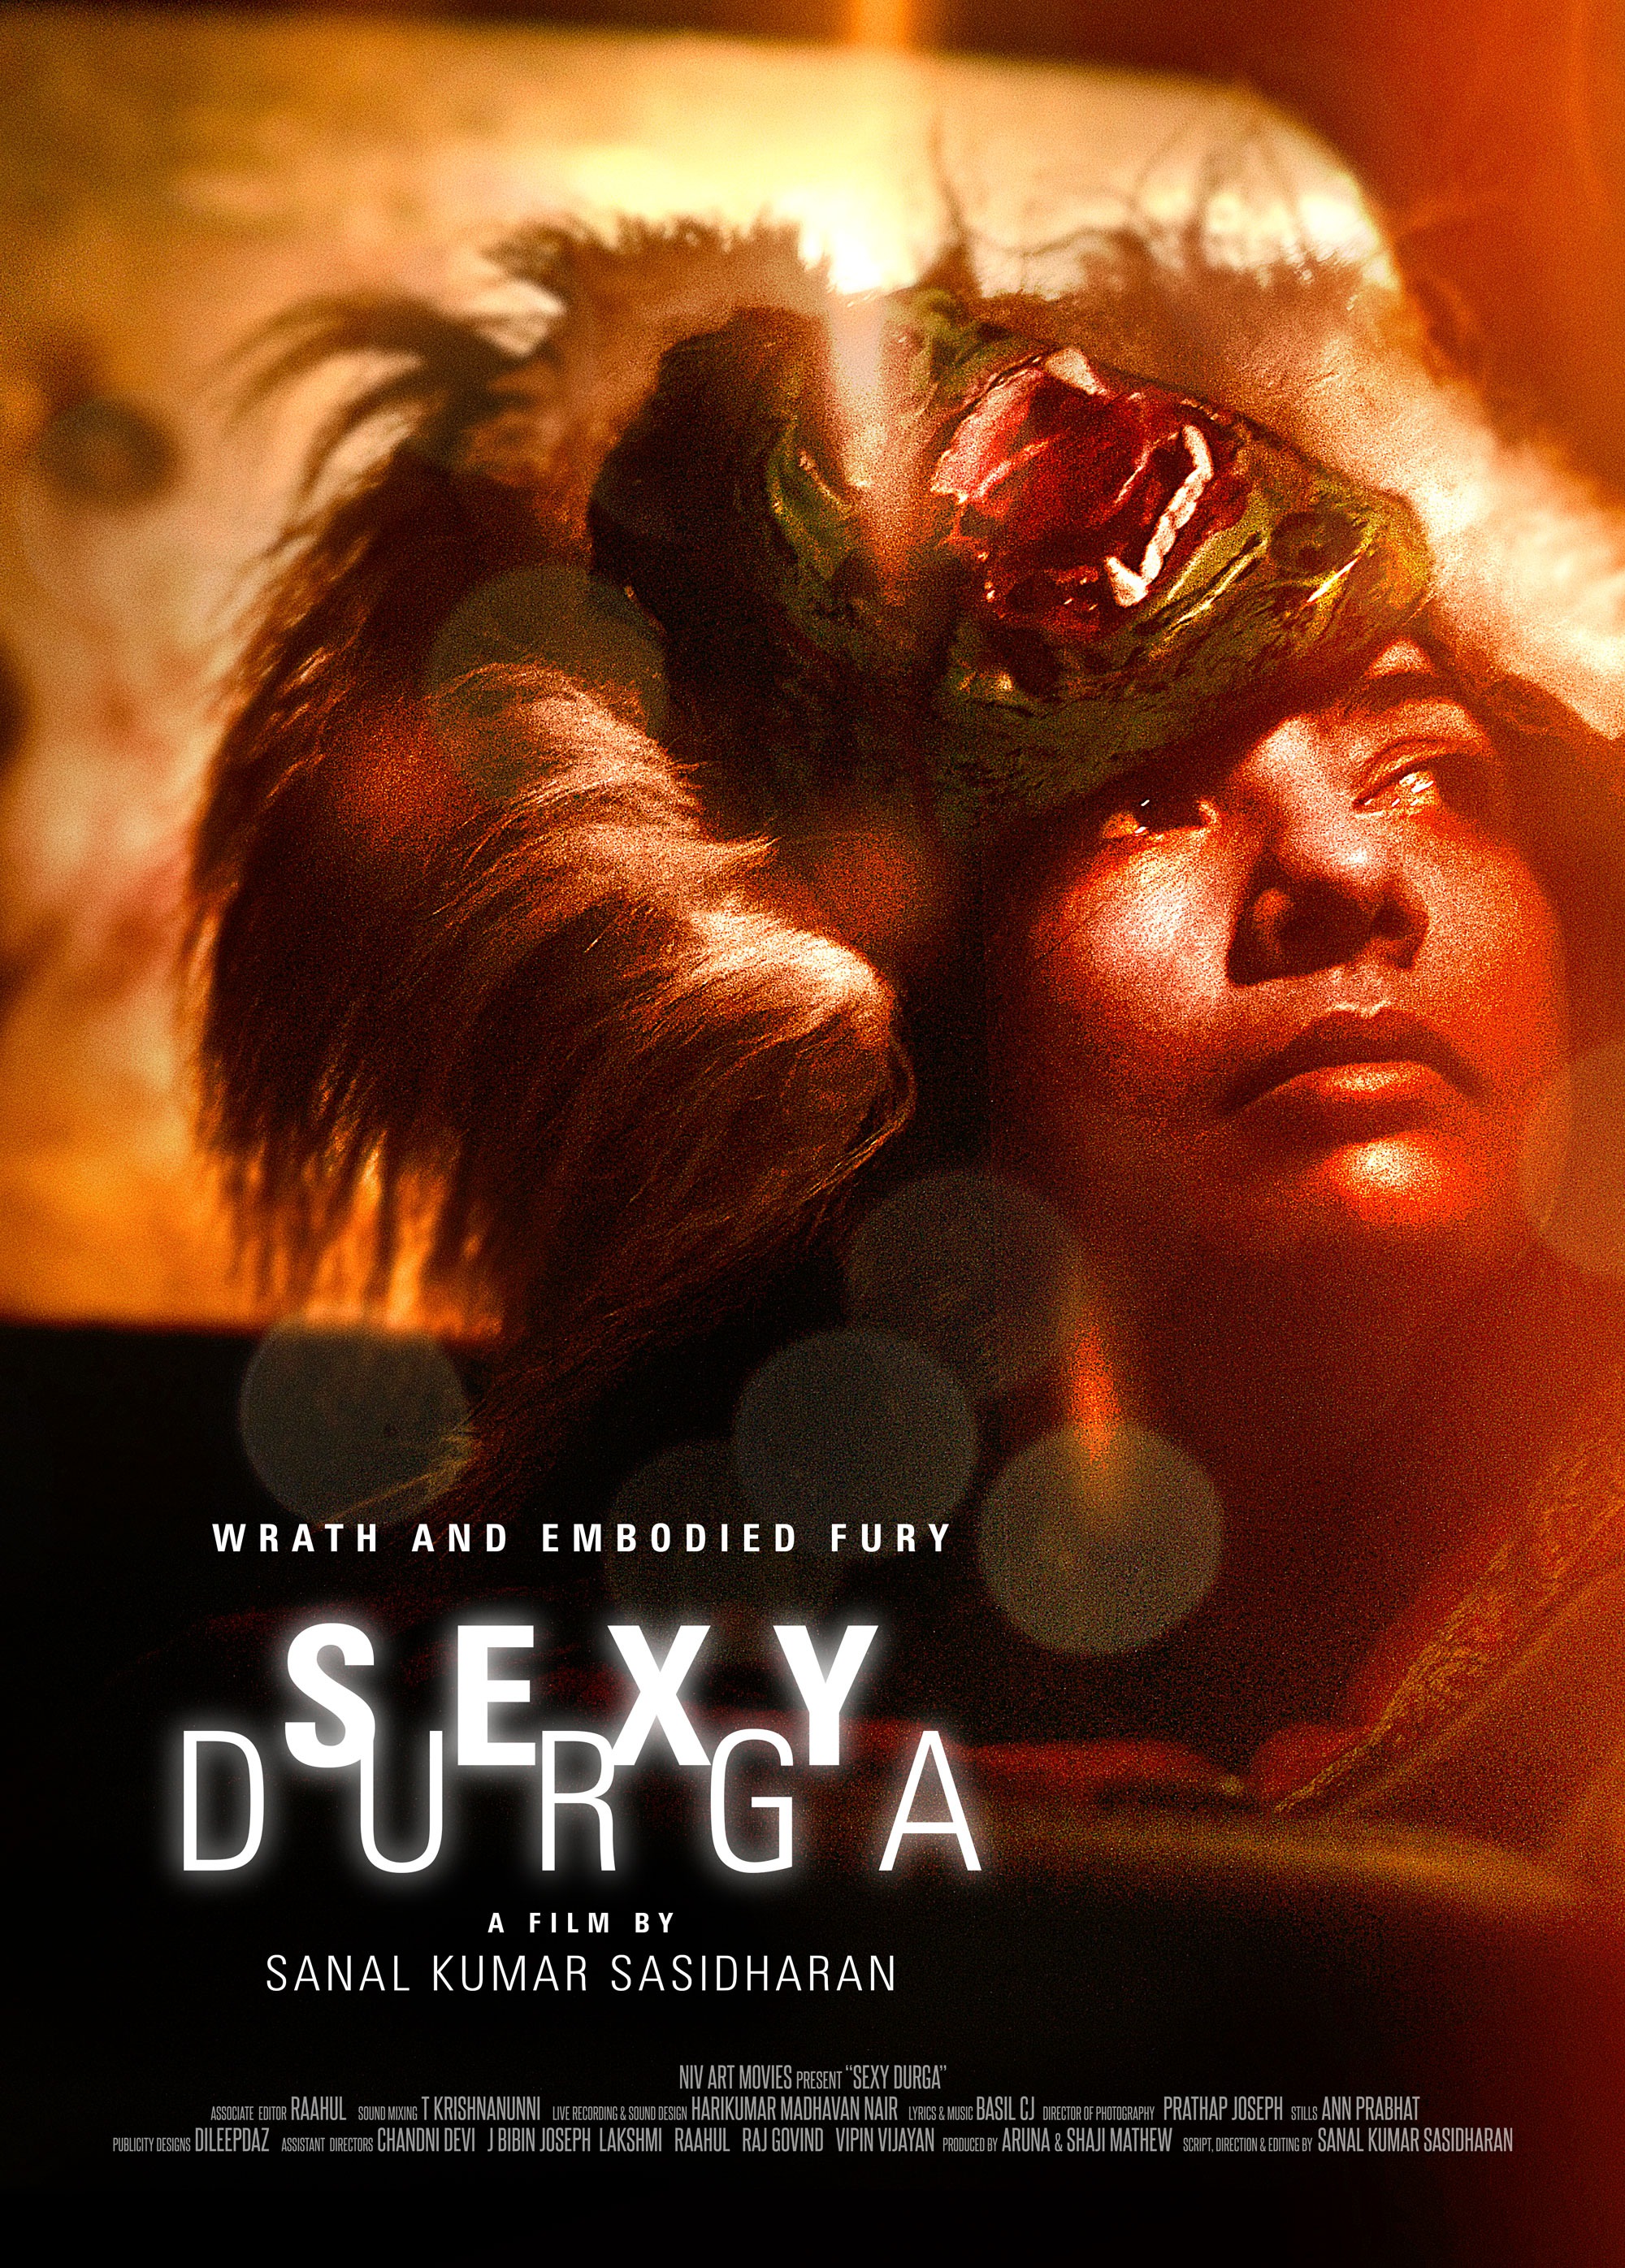 Mega Sized Movie Poster Image for Sexy Durga 